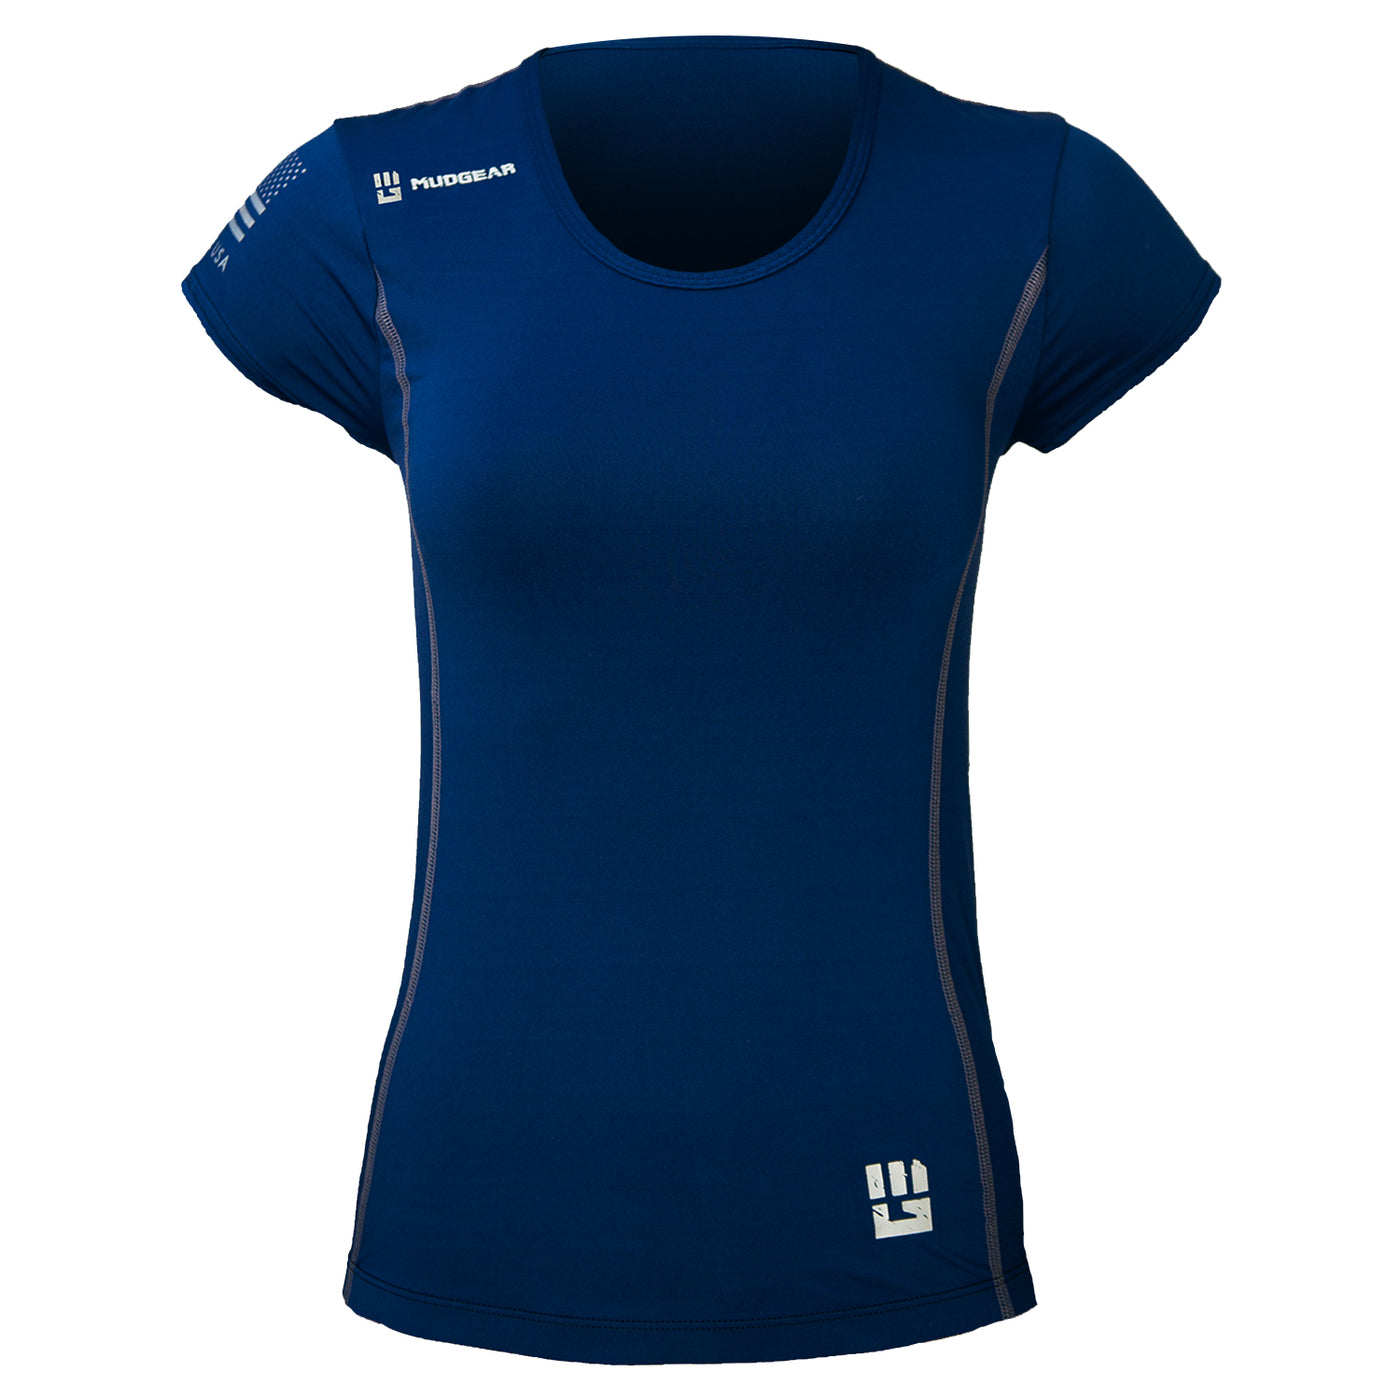 Mudgear Women’s Fitted Performance Shirt - Short Sleeve Front (Navy)